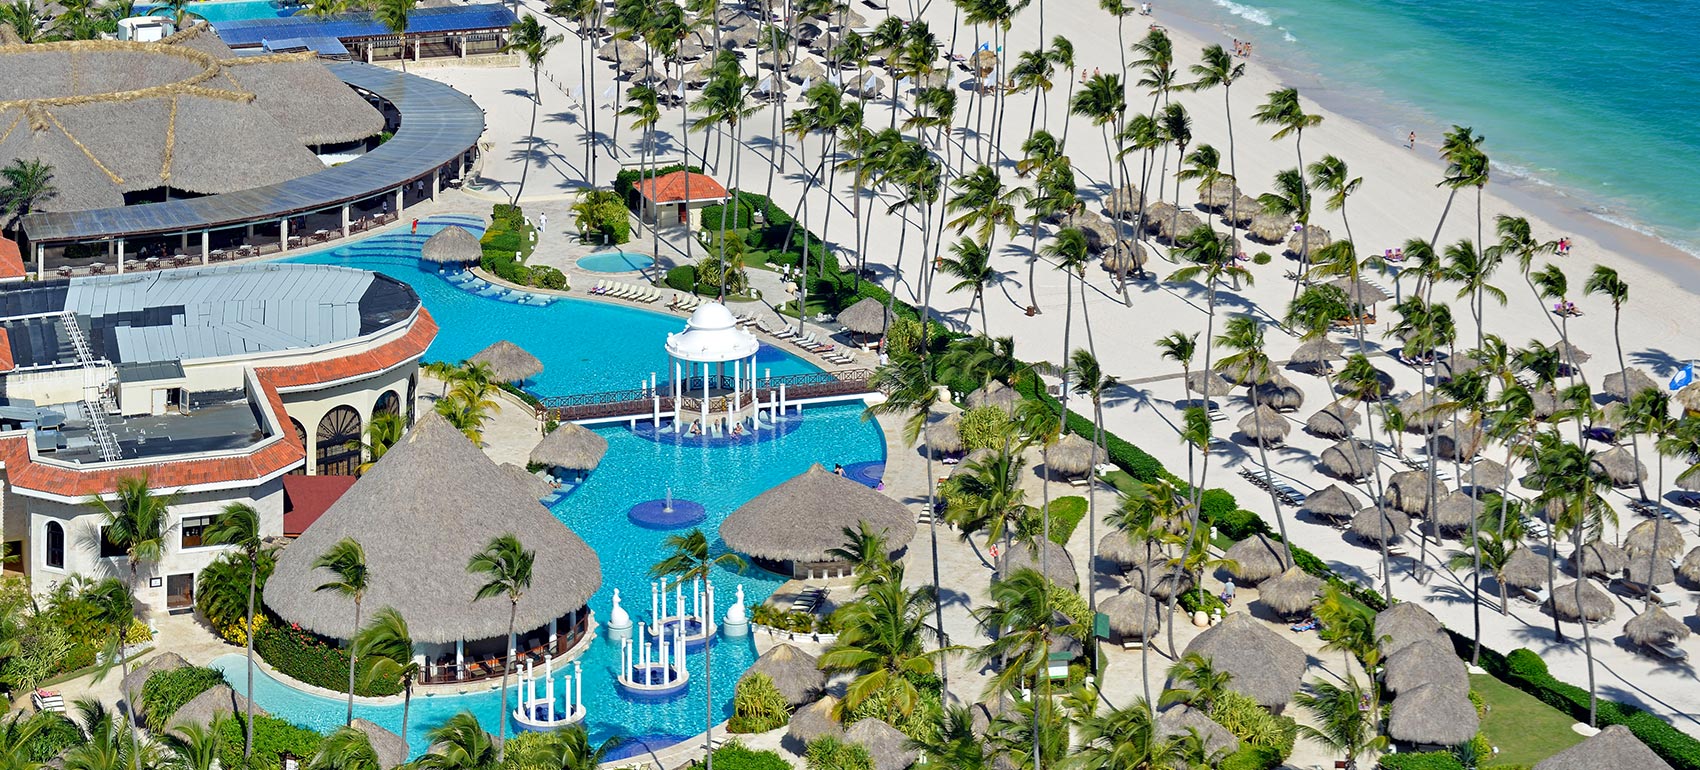 Paradisus Palma Real Golf & Spa Resort, Dominican Republic | Caribtours